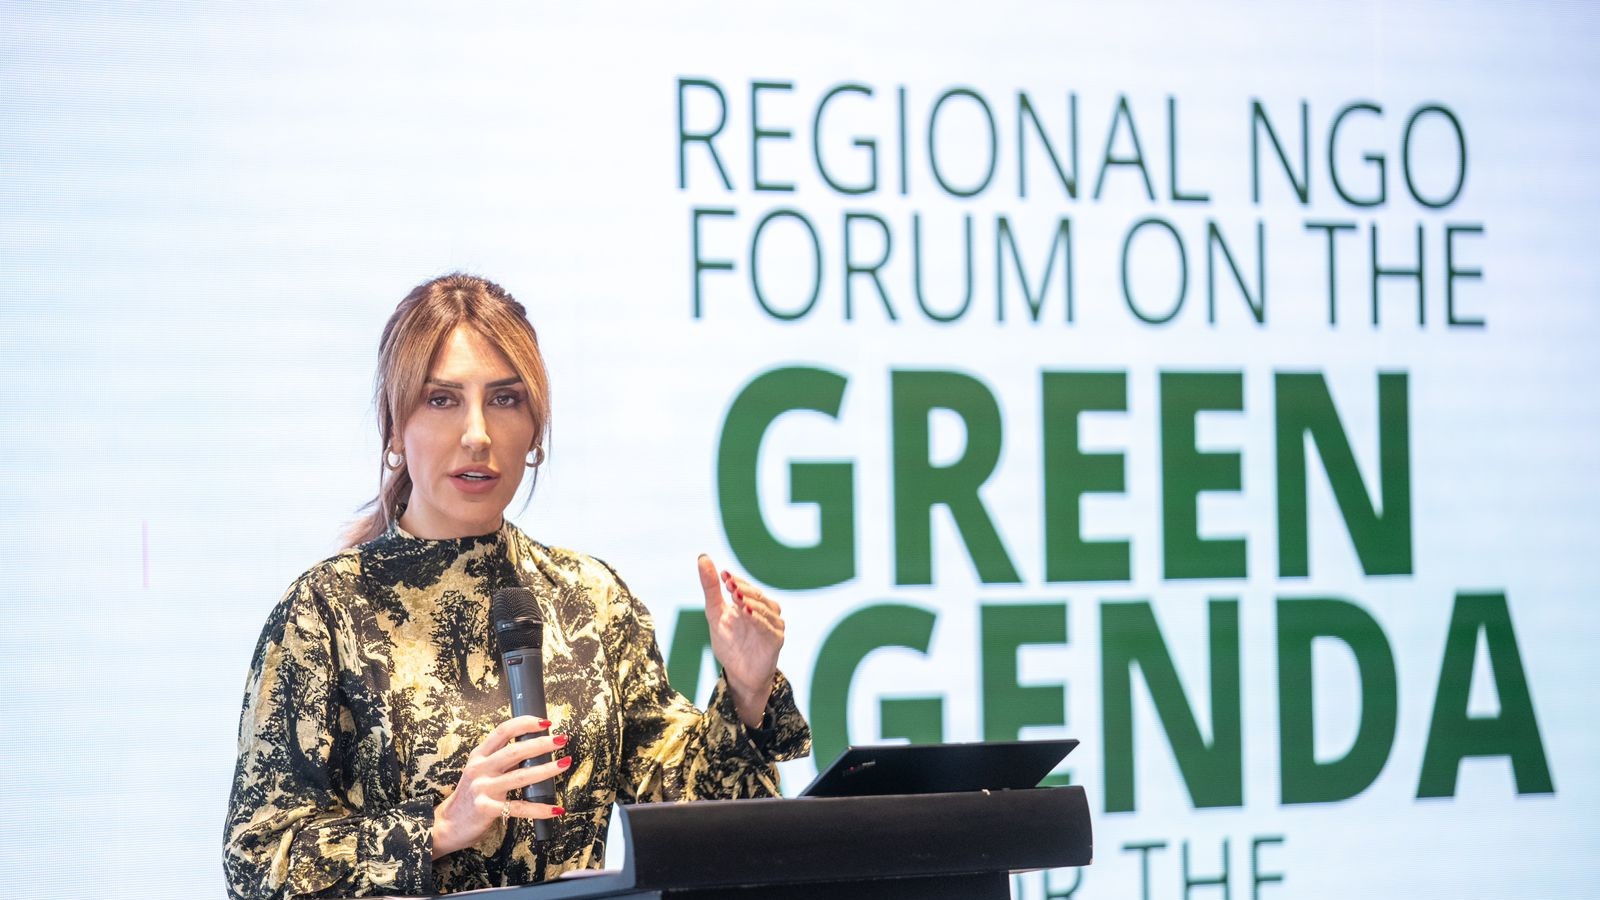 RCC SG Majlinda Bregu opening NGO Forum on Green Agenda for Western Balkans